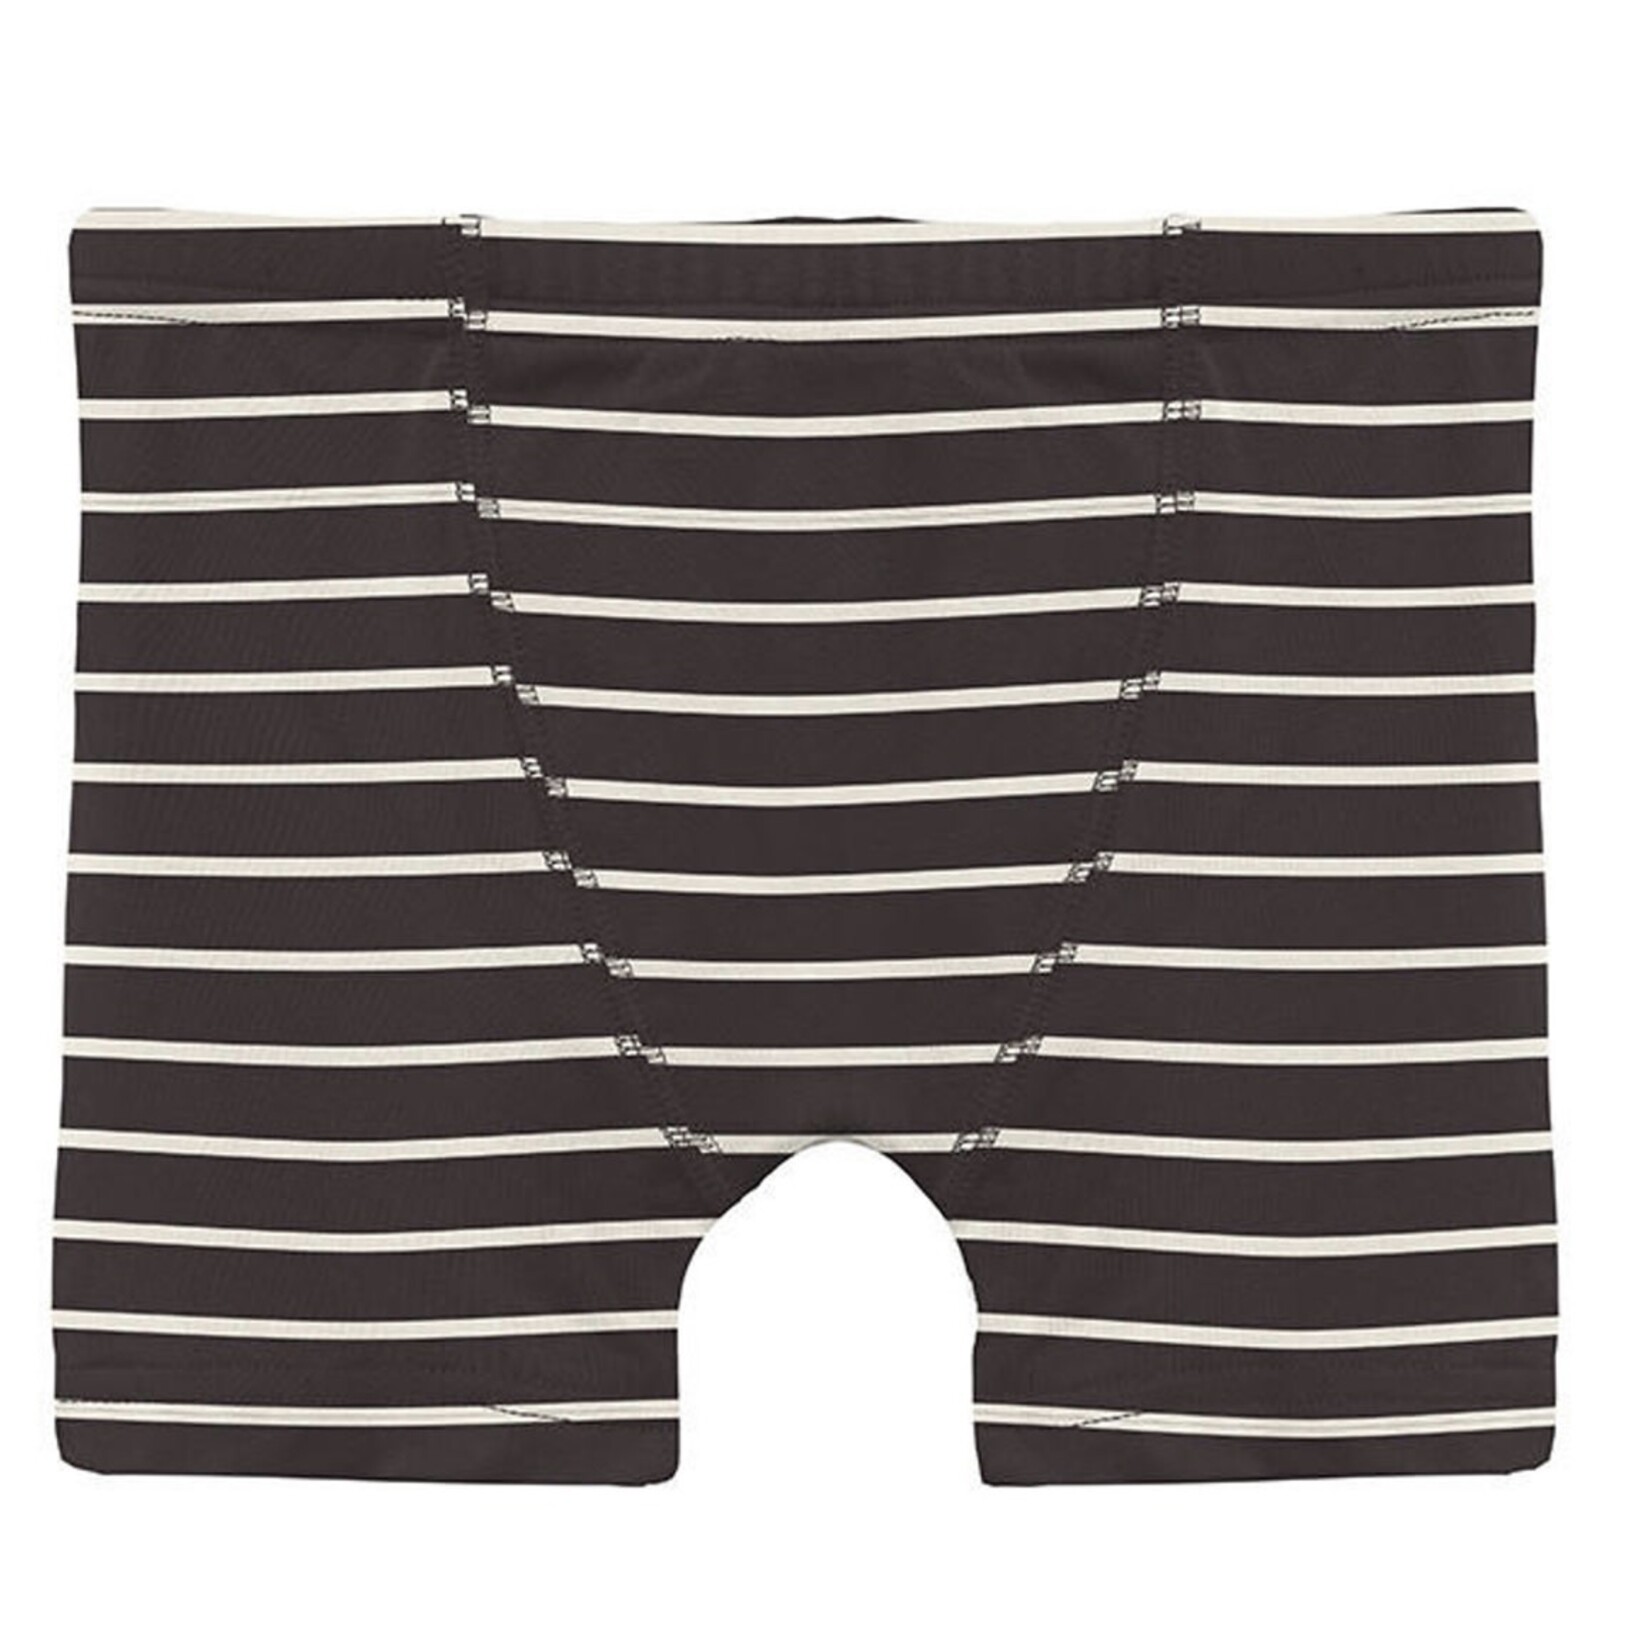 KicKee Pants KicKee Pants - 90s Stripe Boxer Brief